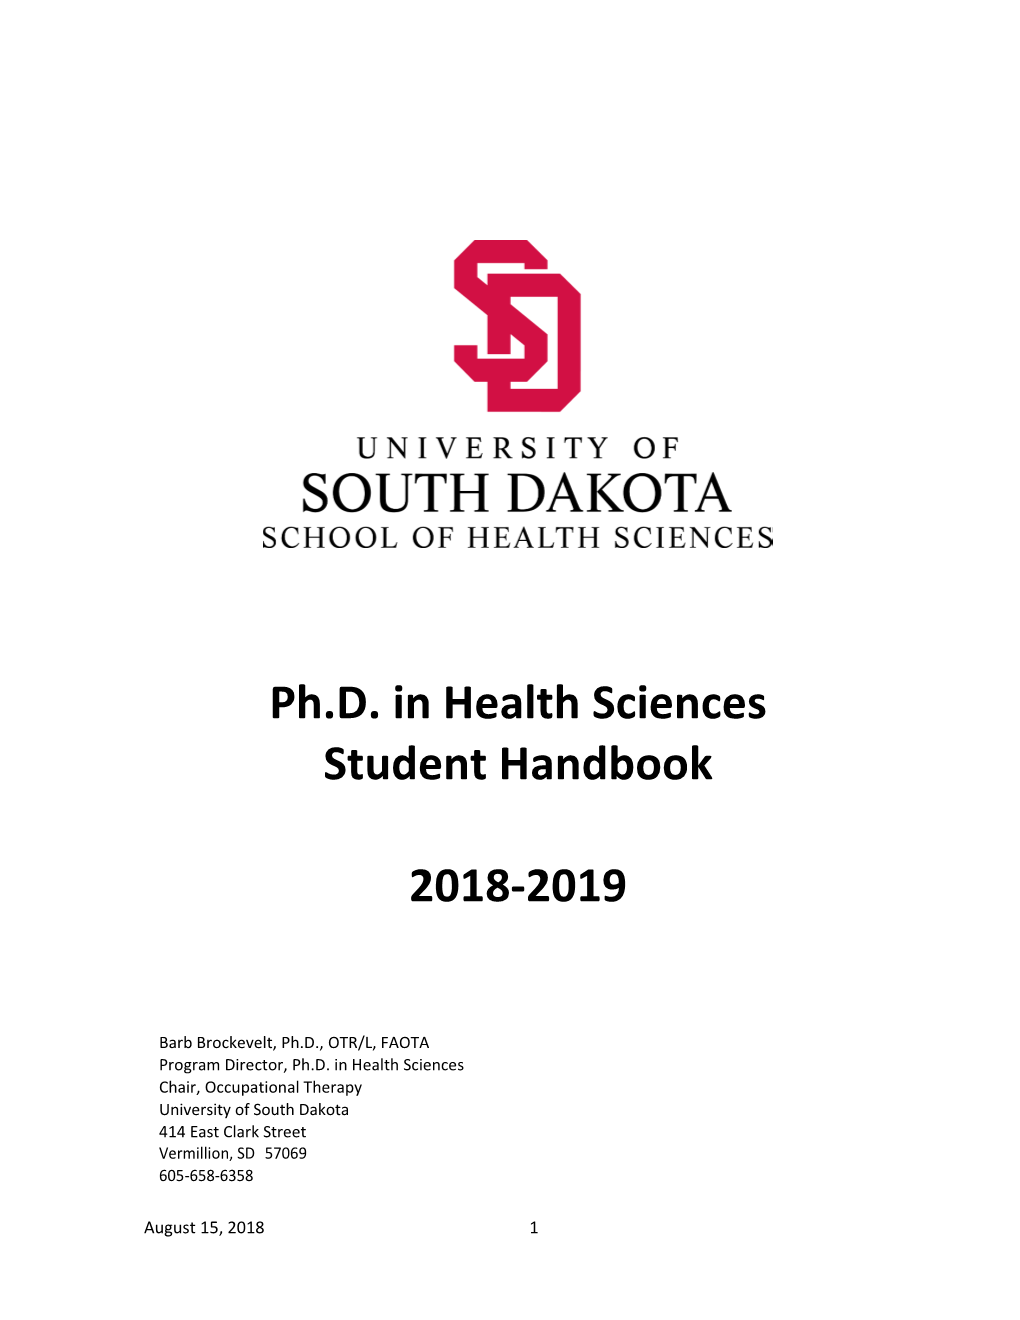 Ph.D. in Health Sciences Student Handbook 2018-2019